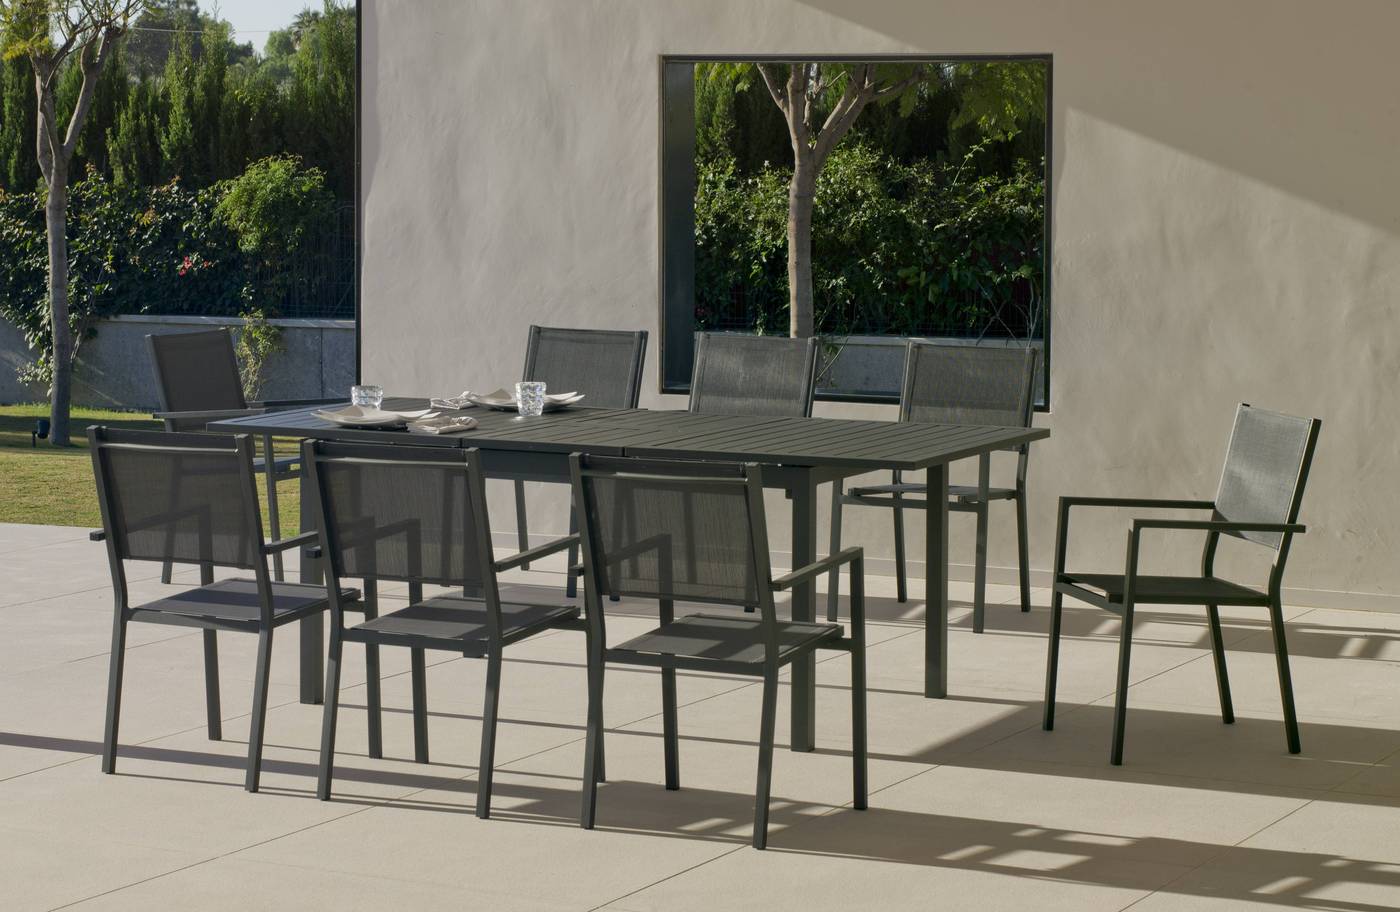 Conjunto de aluminio luxe: mesa extensible 170-220 cm. + 8 sillones de textilen. Disponible en color blanco, plata, bronce, antracita o champagne.